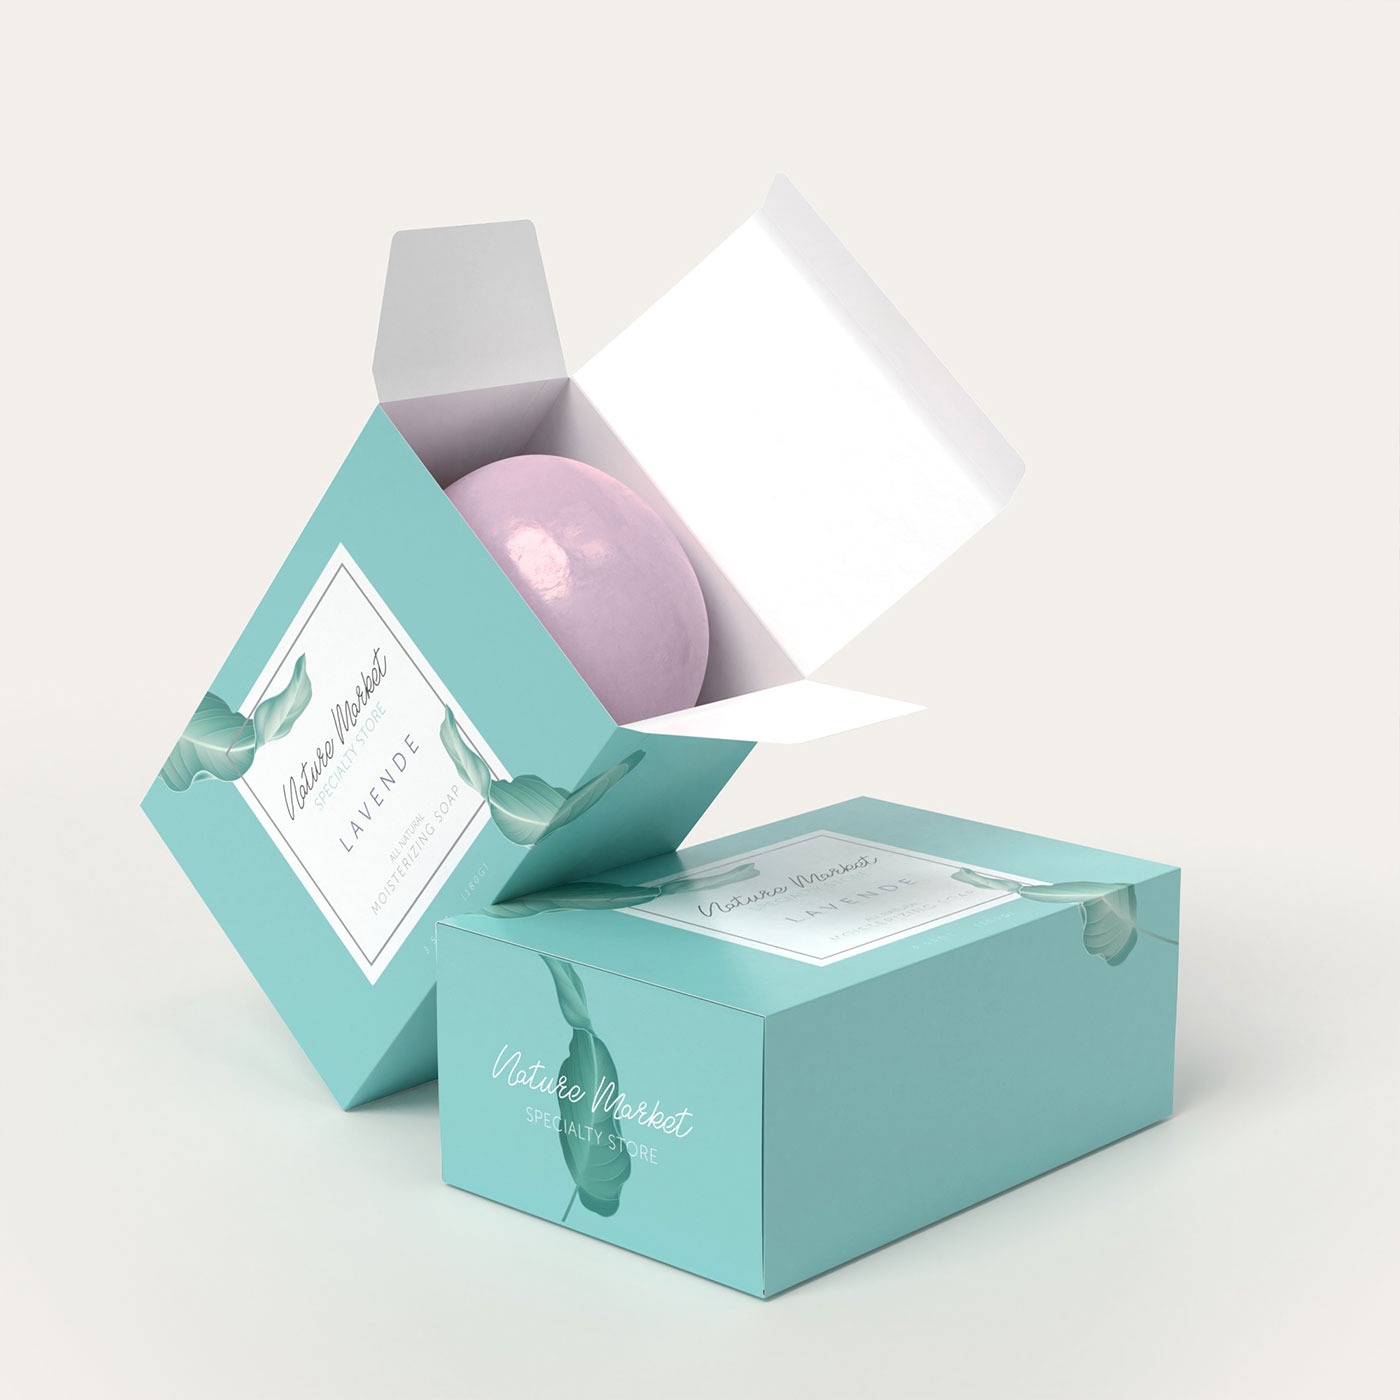 Custom printed soap boxes